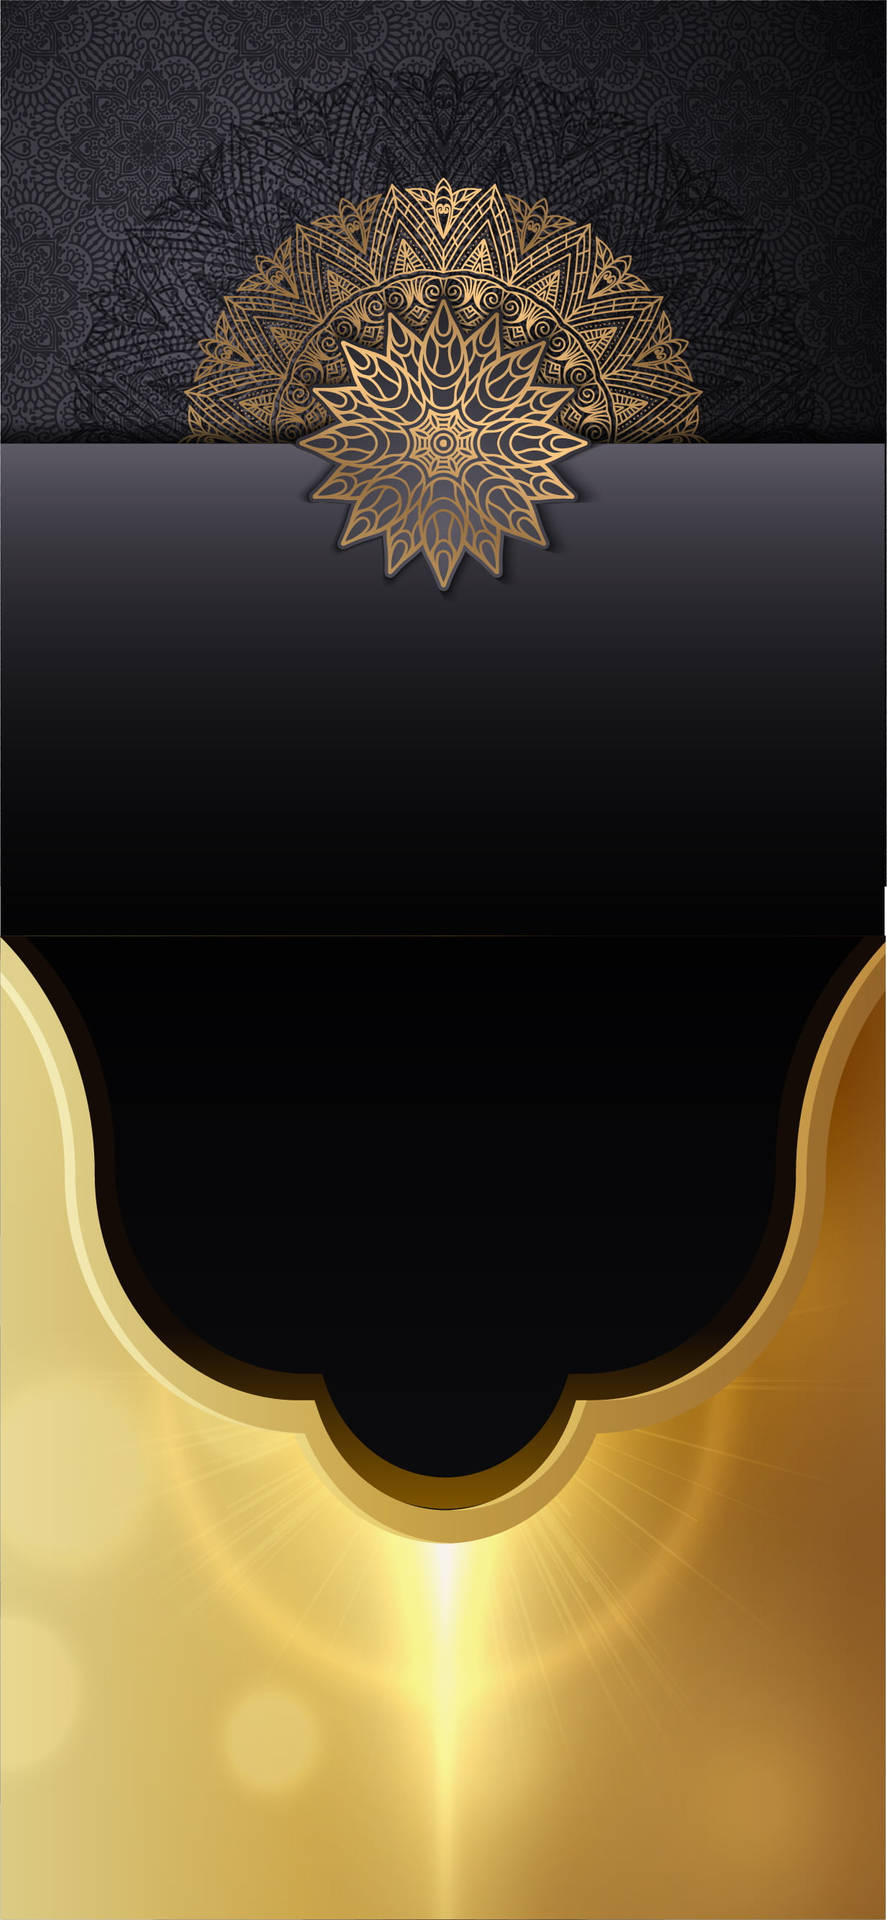 Mandalaschwarz Und Gold Iphone Wallpaper